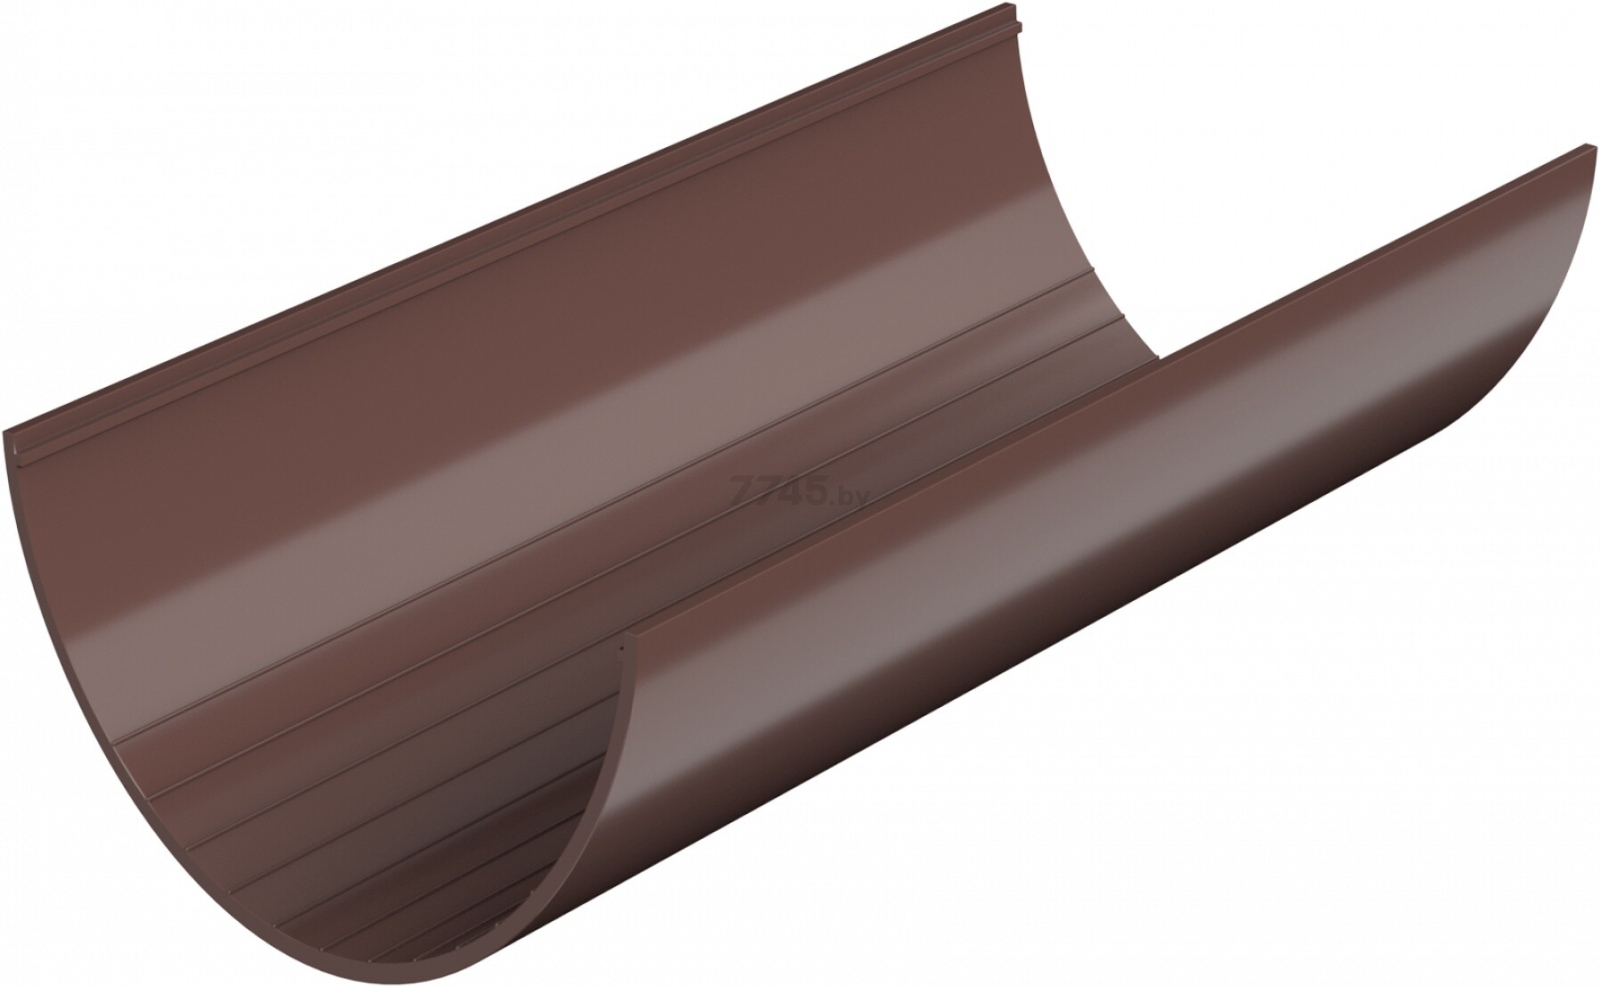 Желоб ПВХ ТЕХНОНИКОЛЬ 125 мм коричневый глянец 3 м (563104)